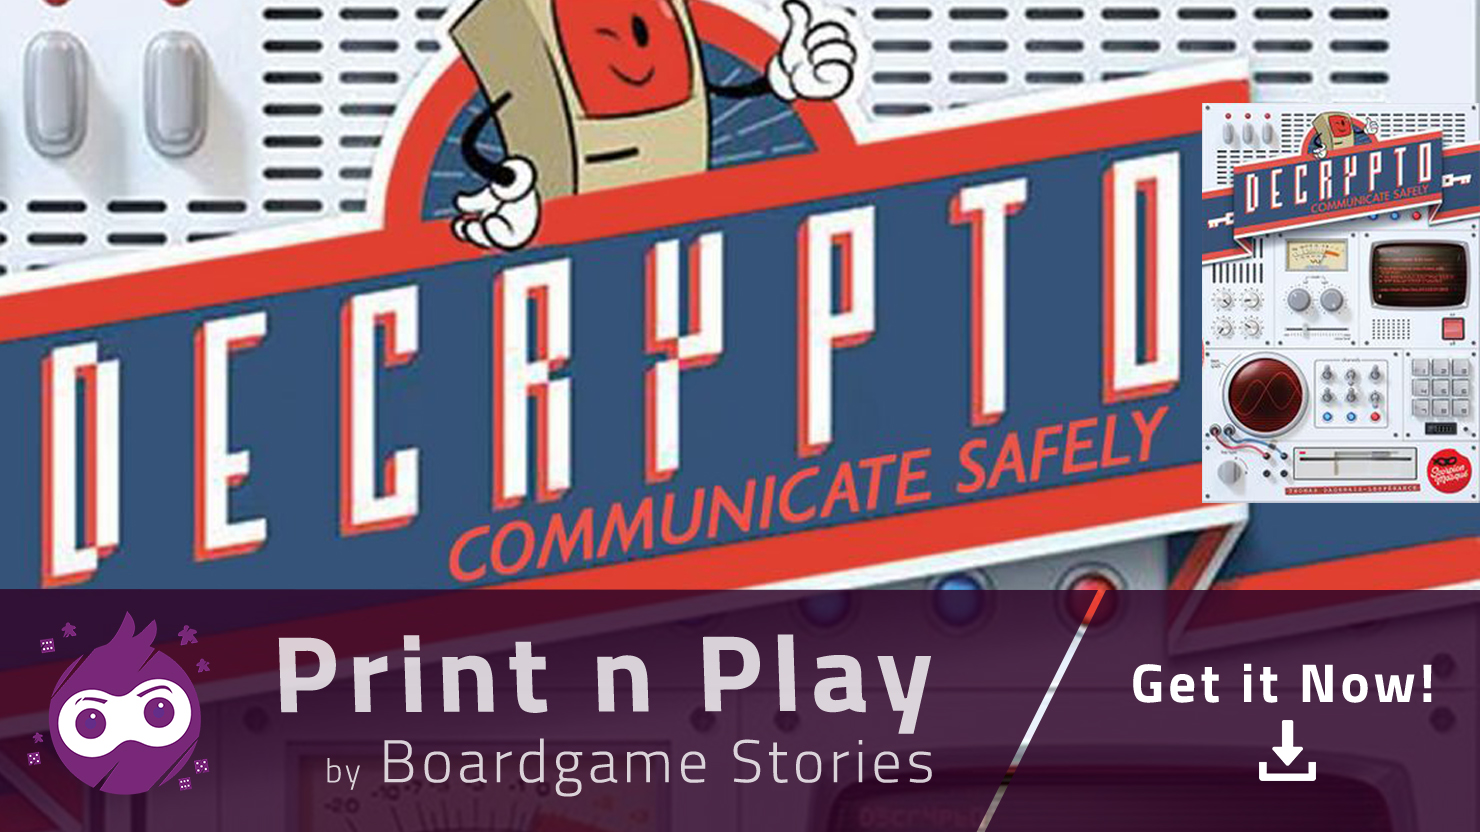 Decrypto - Print n Play - Boardgame Stories